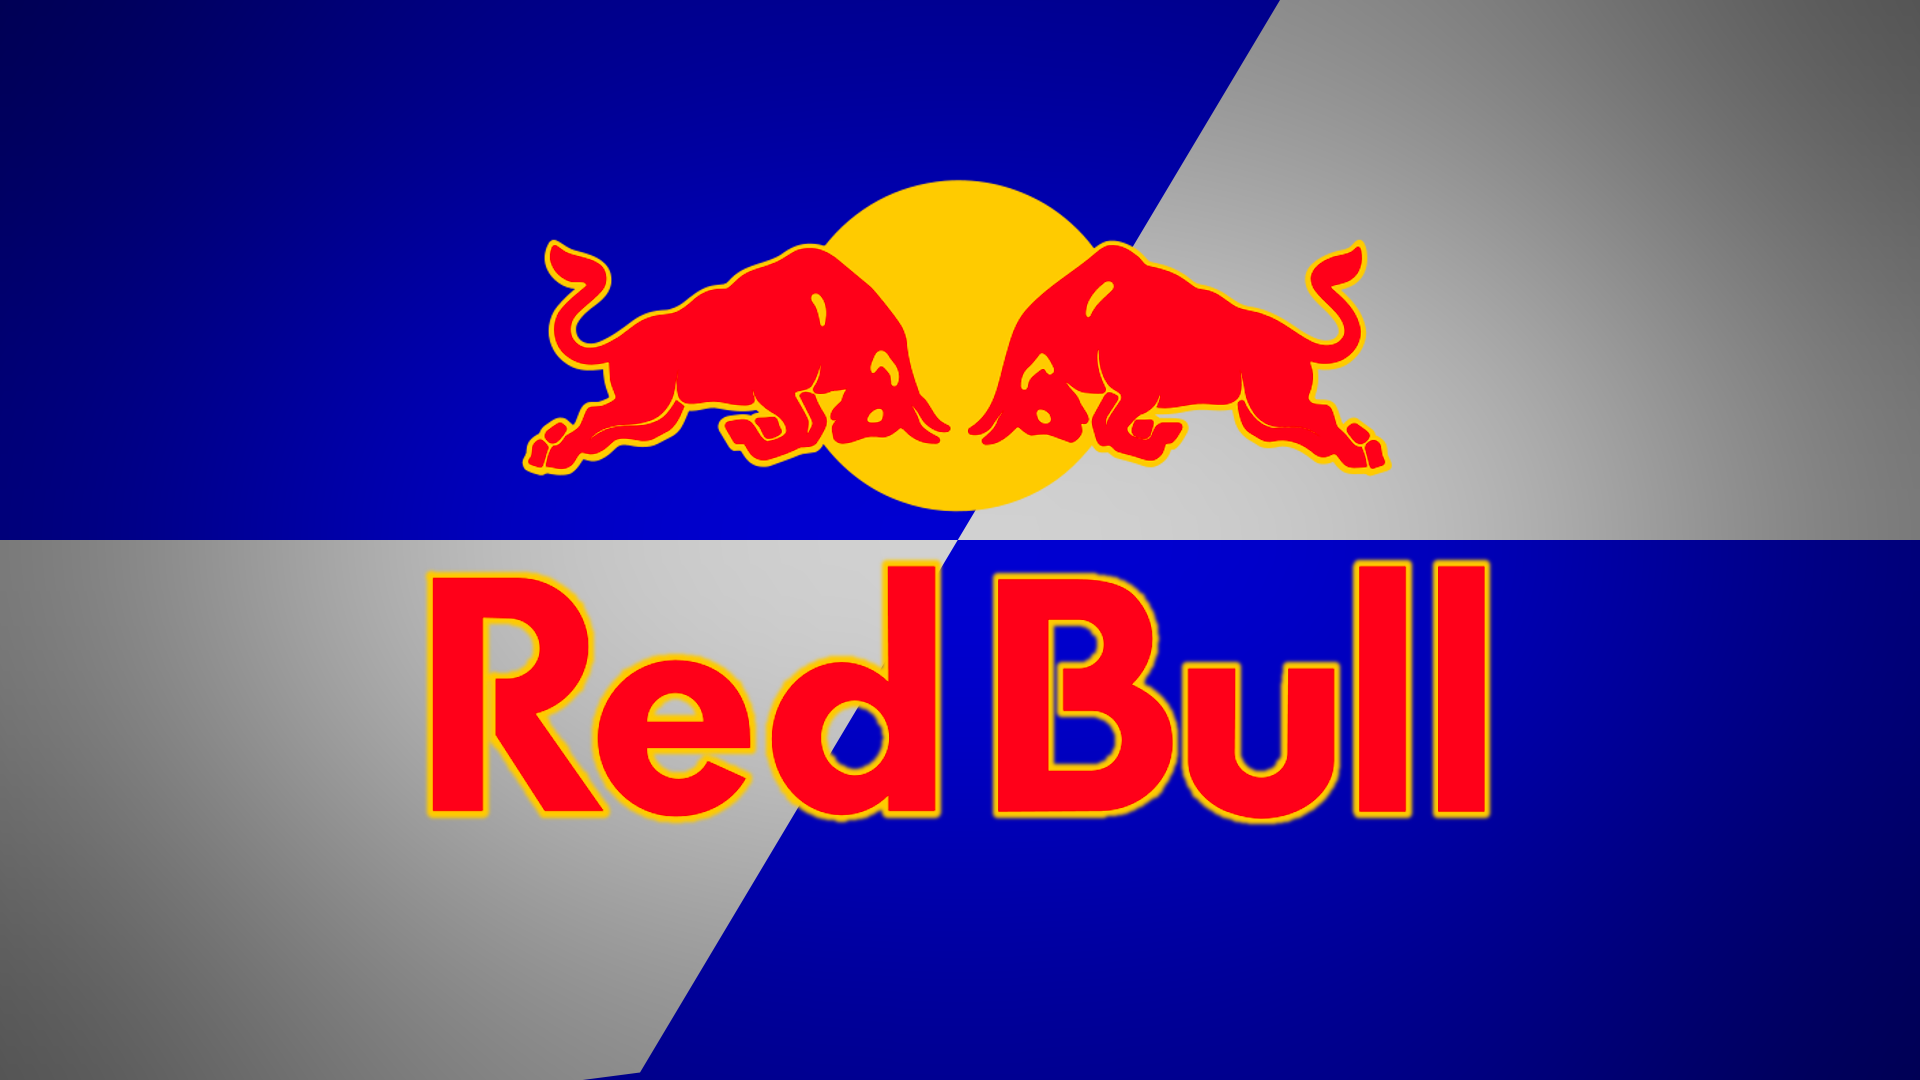 Red Bull Wallpaper By Cleybi